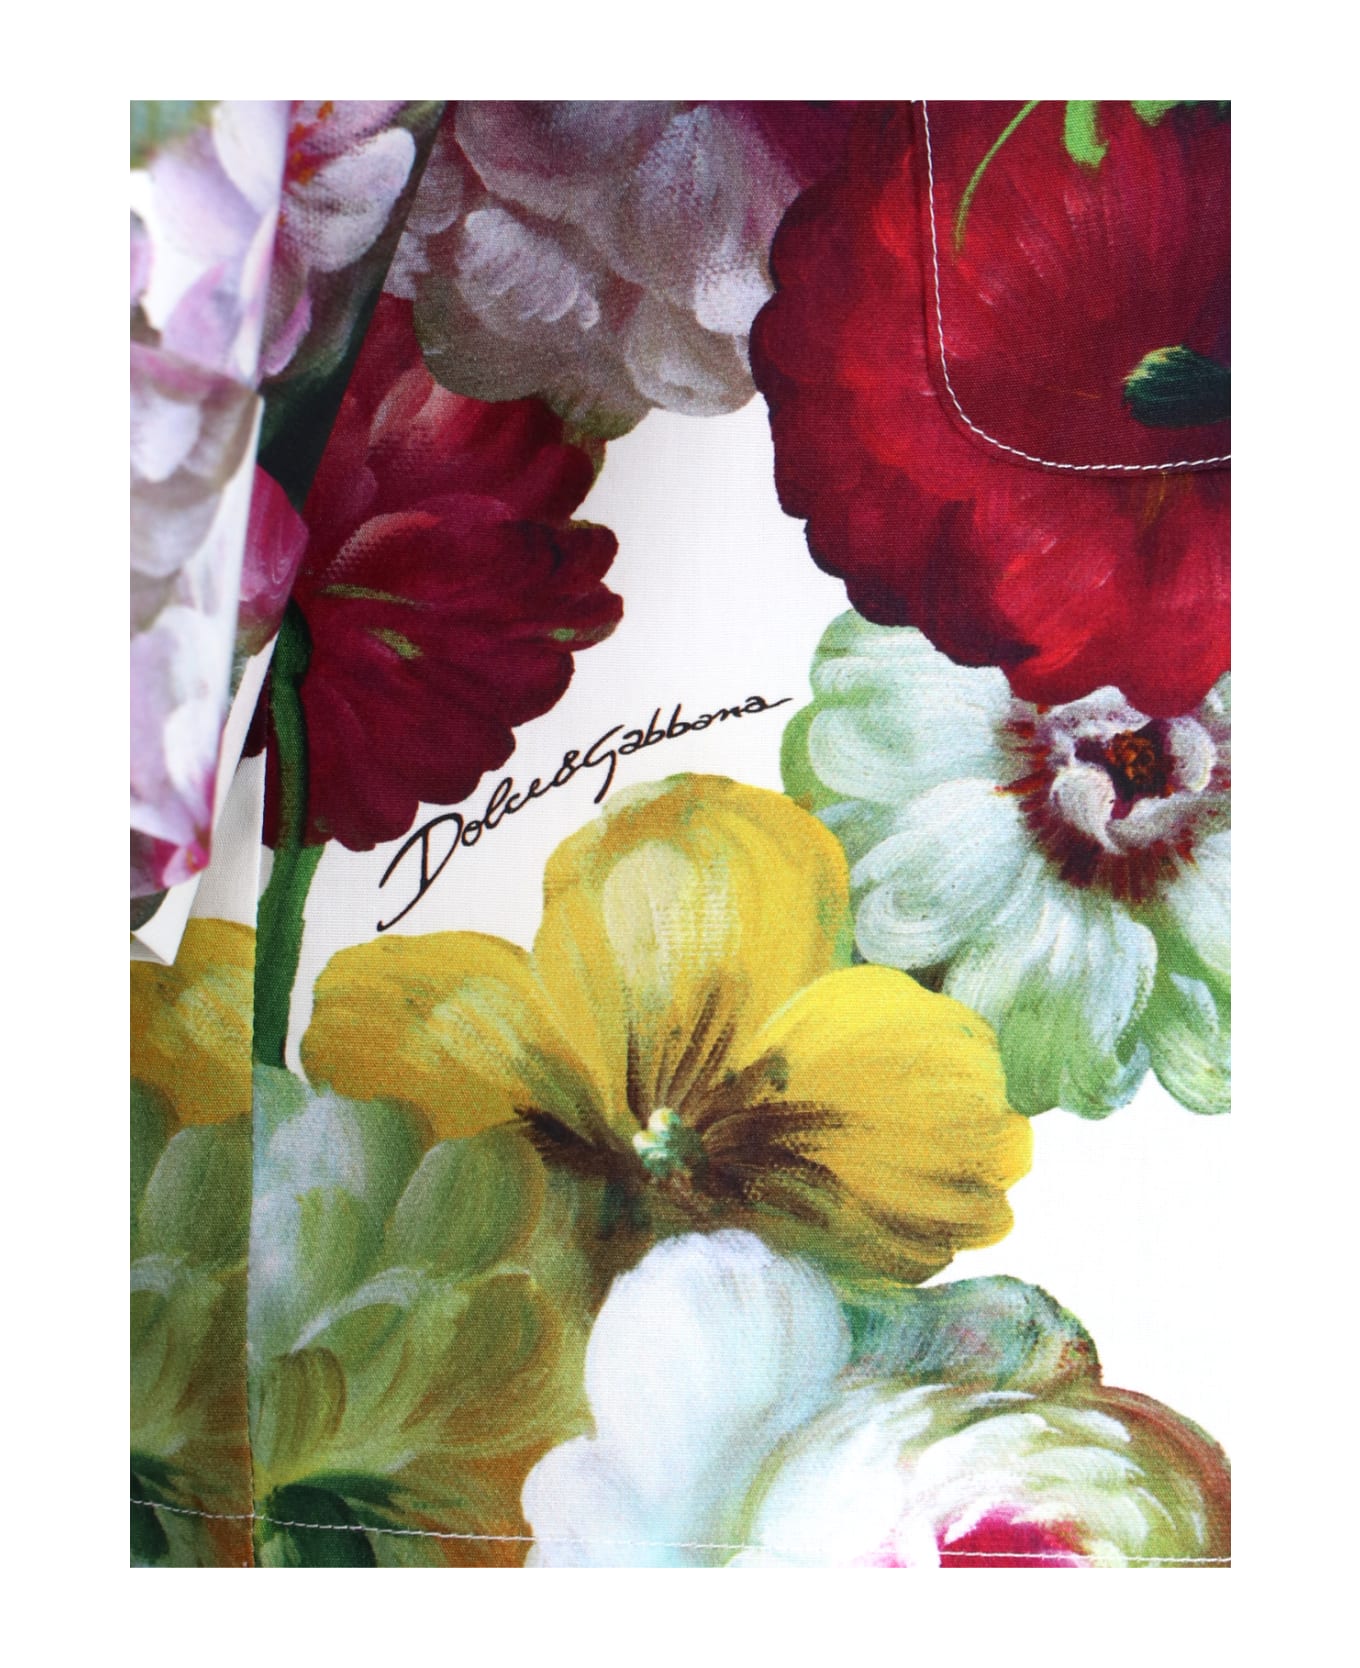 Dolce & Gabbana Garden Print Crop Shirt - Multicolor